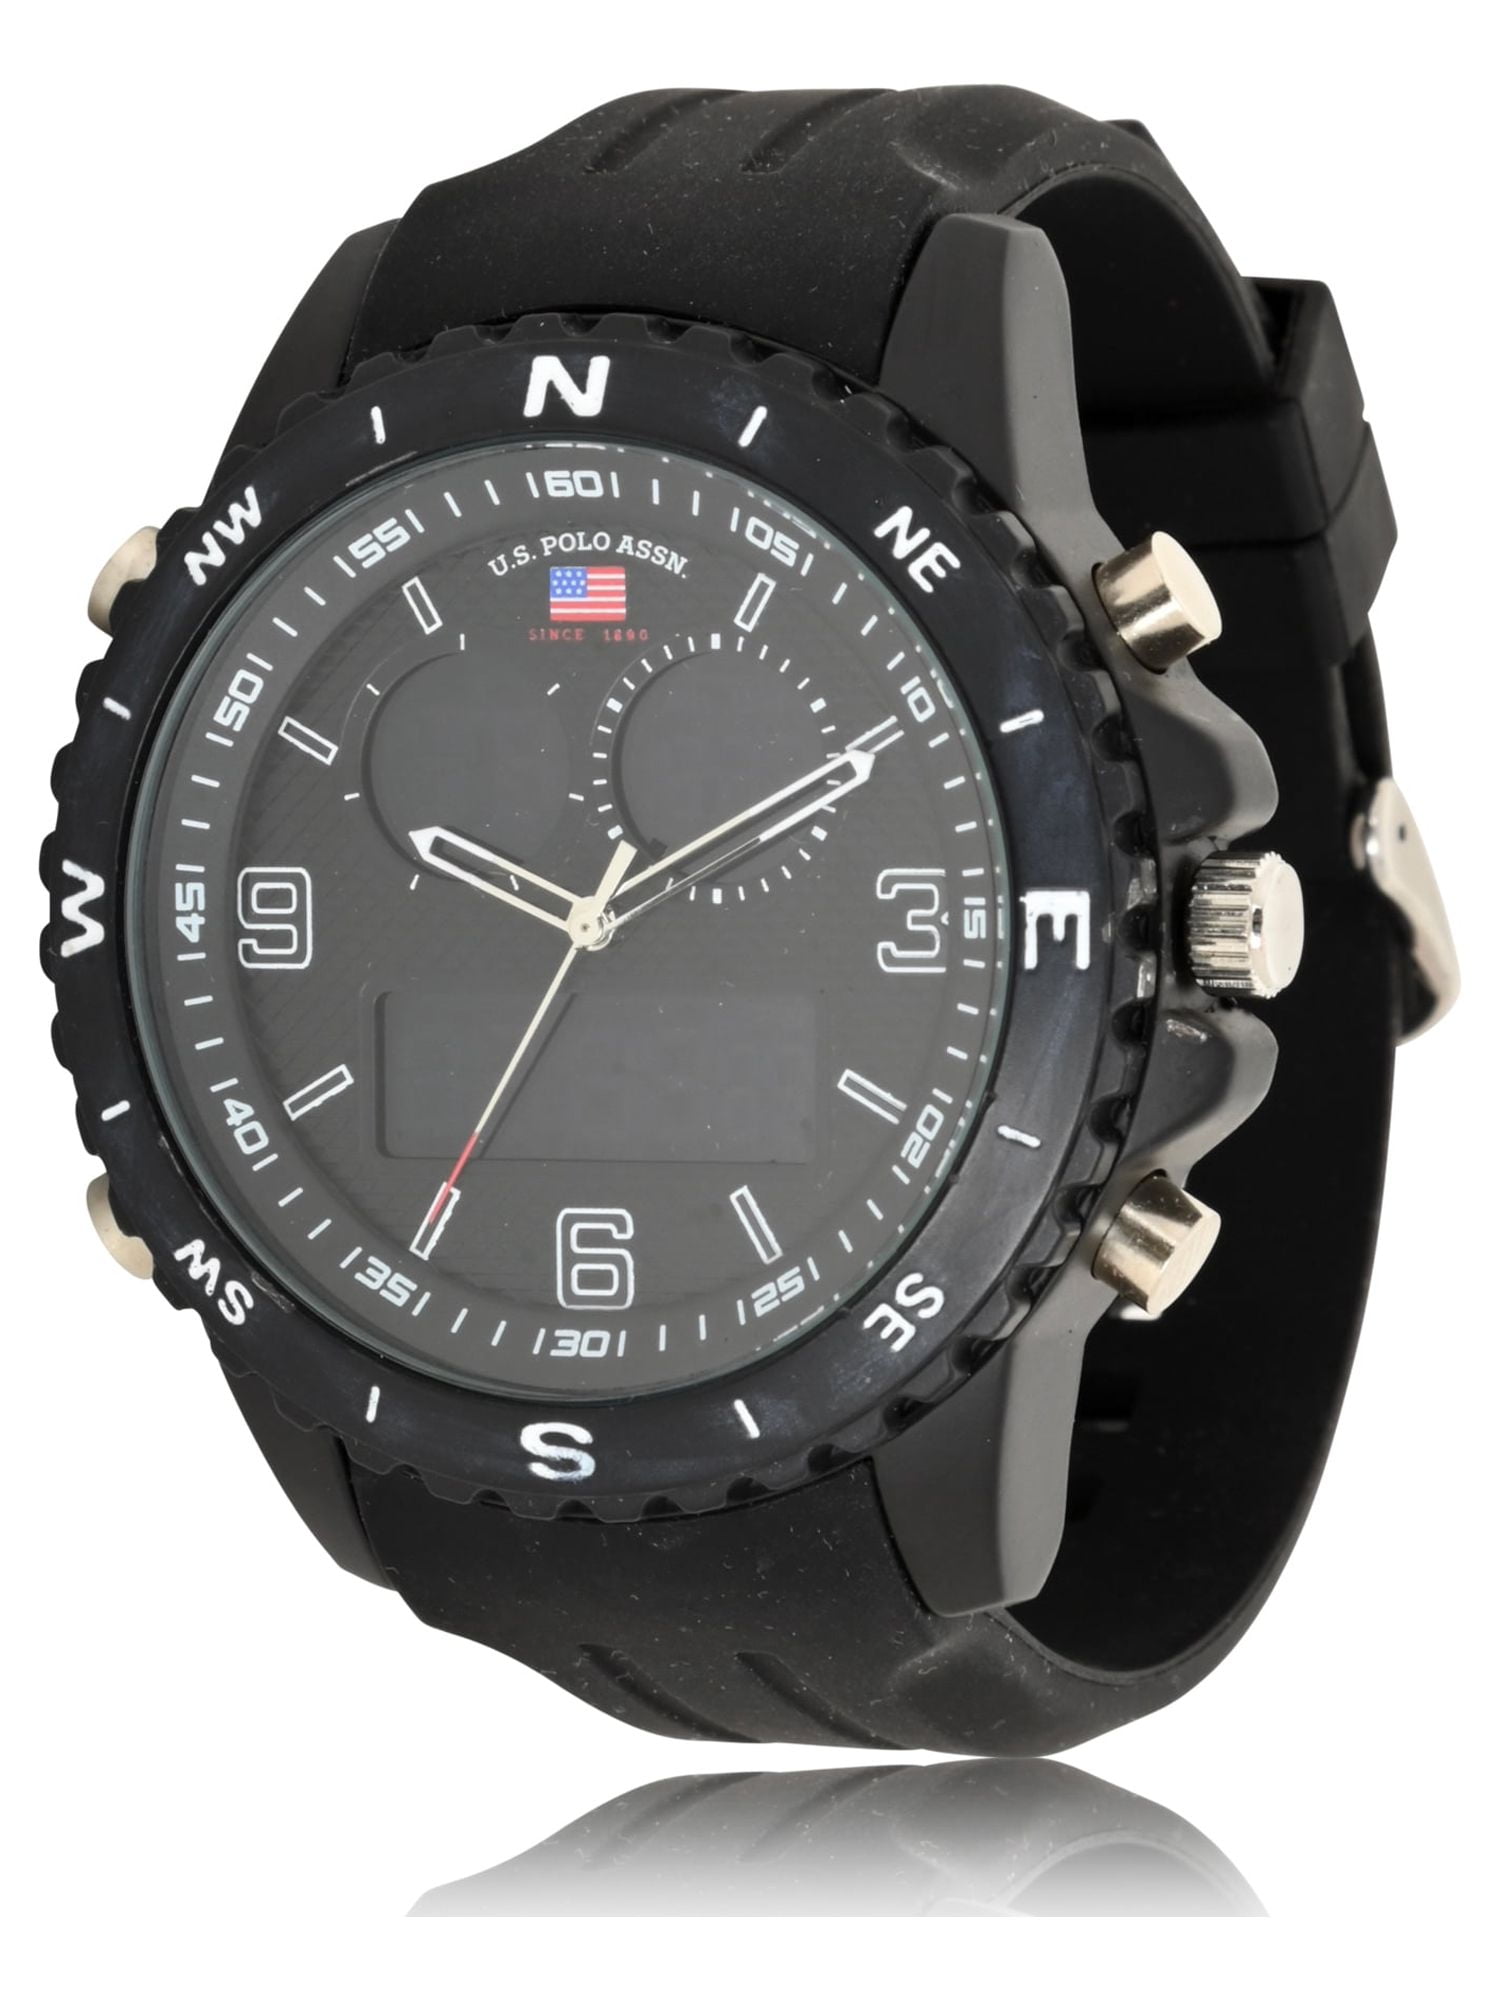 U.S. Polo Assn. Adult Male Analog Watch with Black Rubber Strap (US9766WM)  - Walmart.com